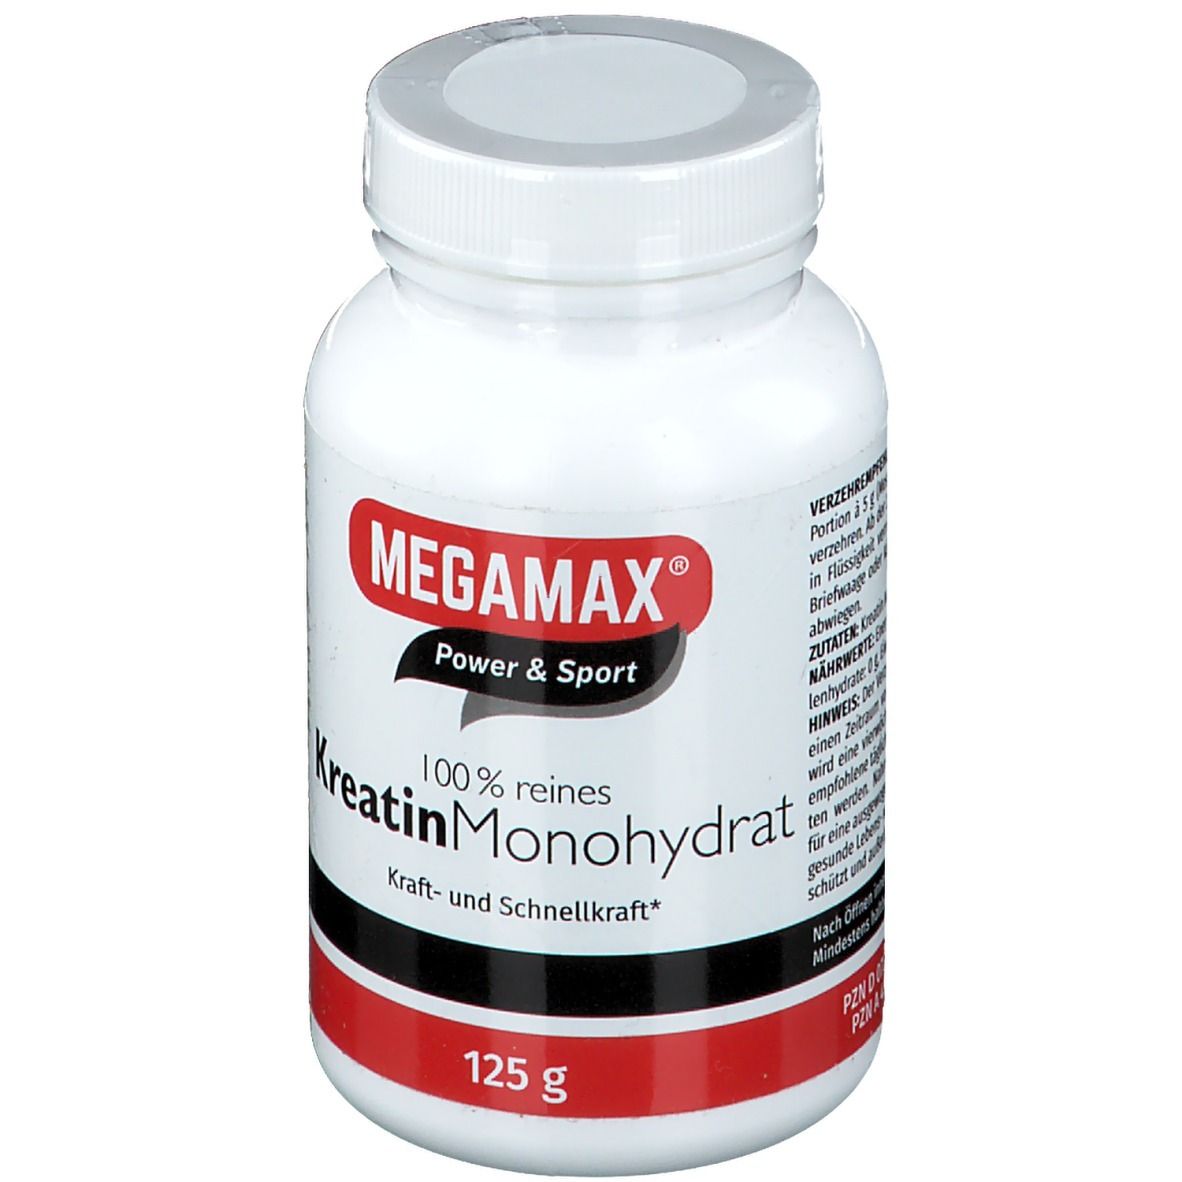 MEGAMAX® Power & Sport 100% reines KreatinMonohydrat